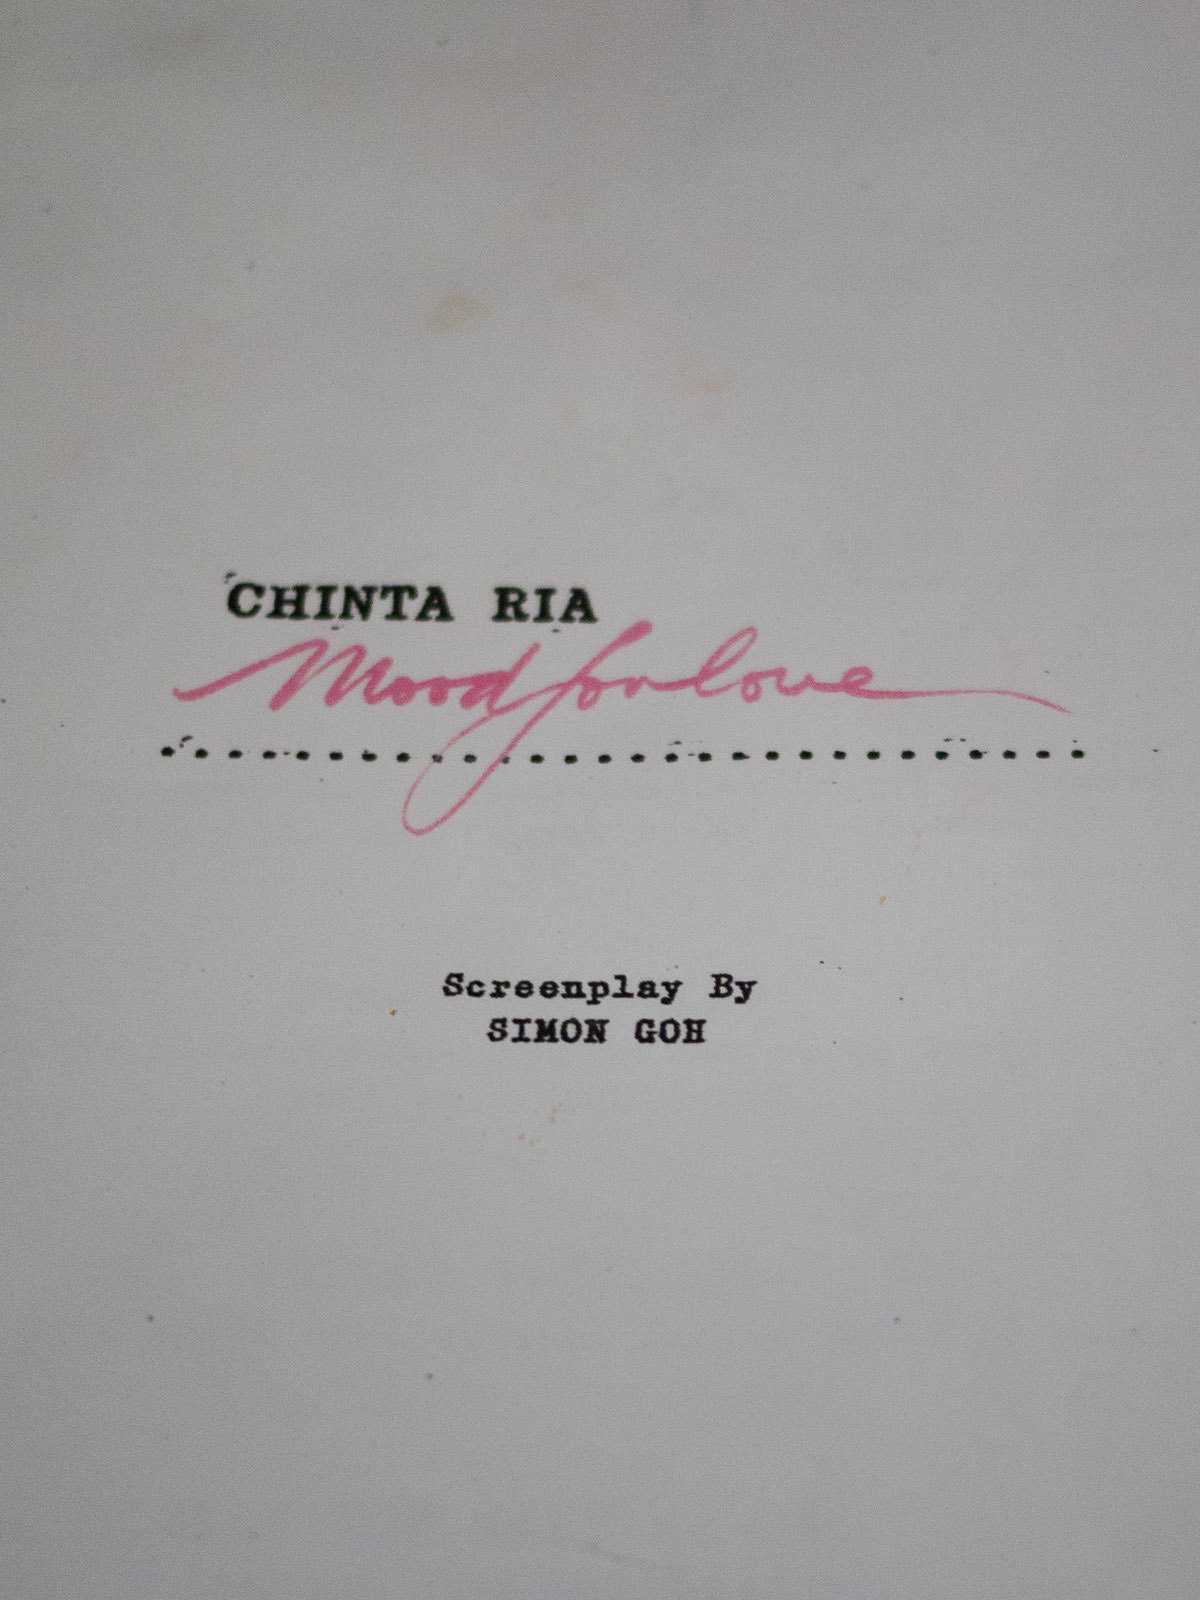 Chinta Ria... Mood for Love menu